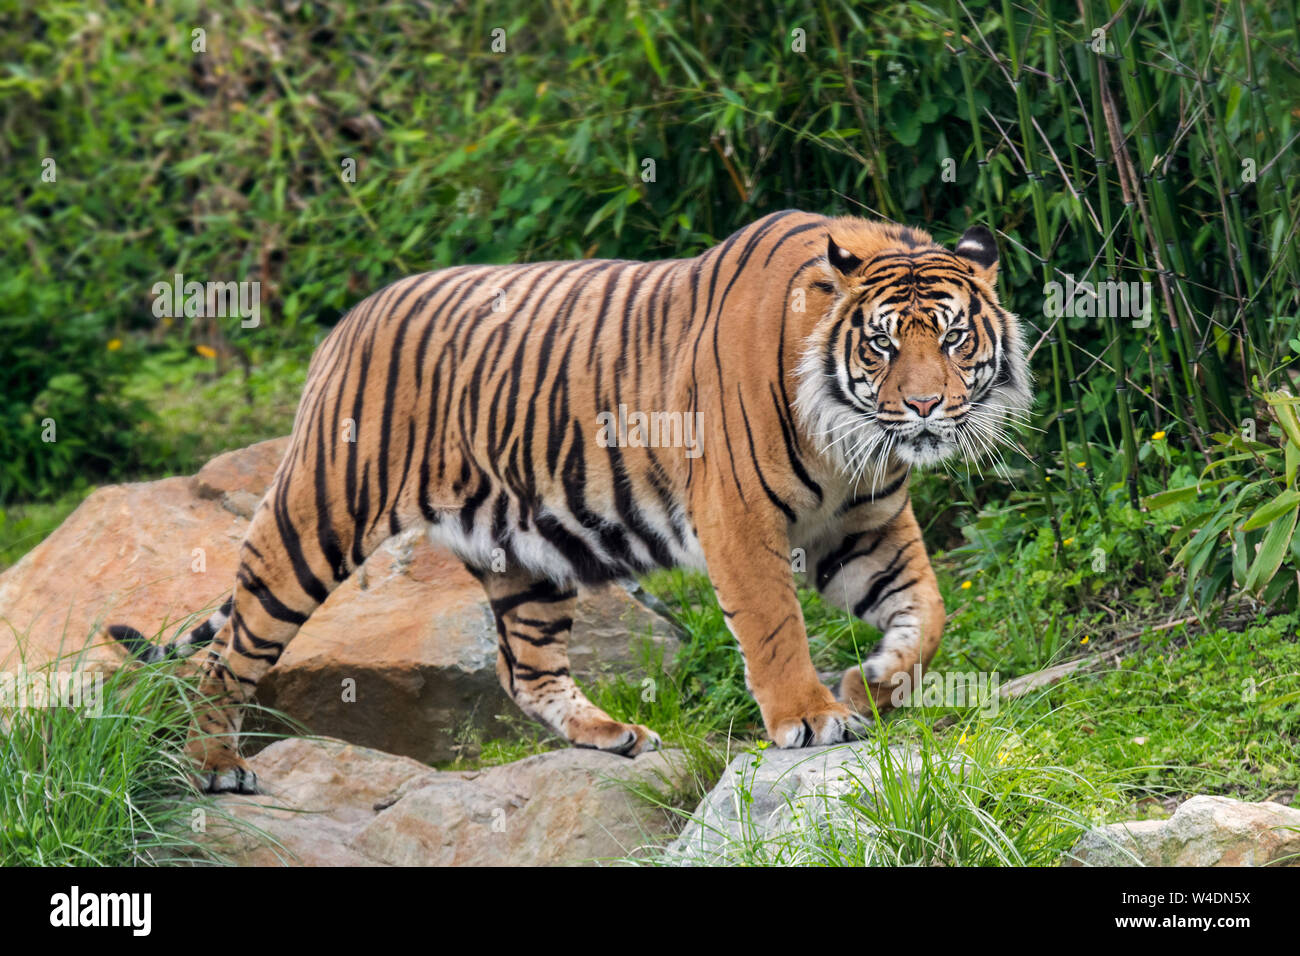 Sumatran tiger (Panthera tigris sondaica) walking in forest, native to the Indonesian island of Sumatra, Indonesia Stock Photo